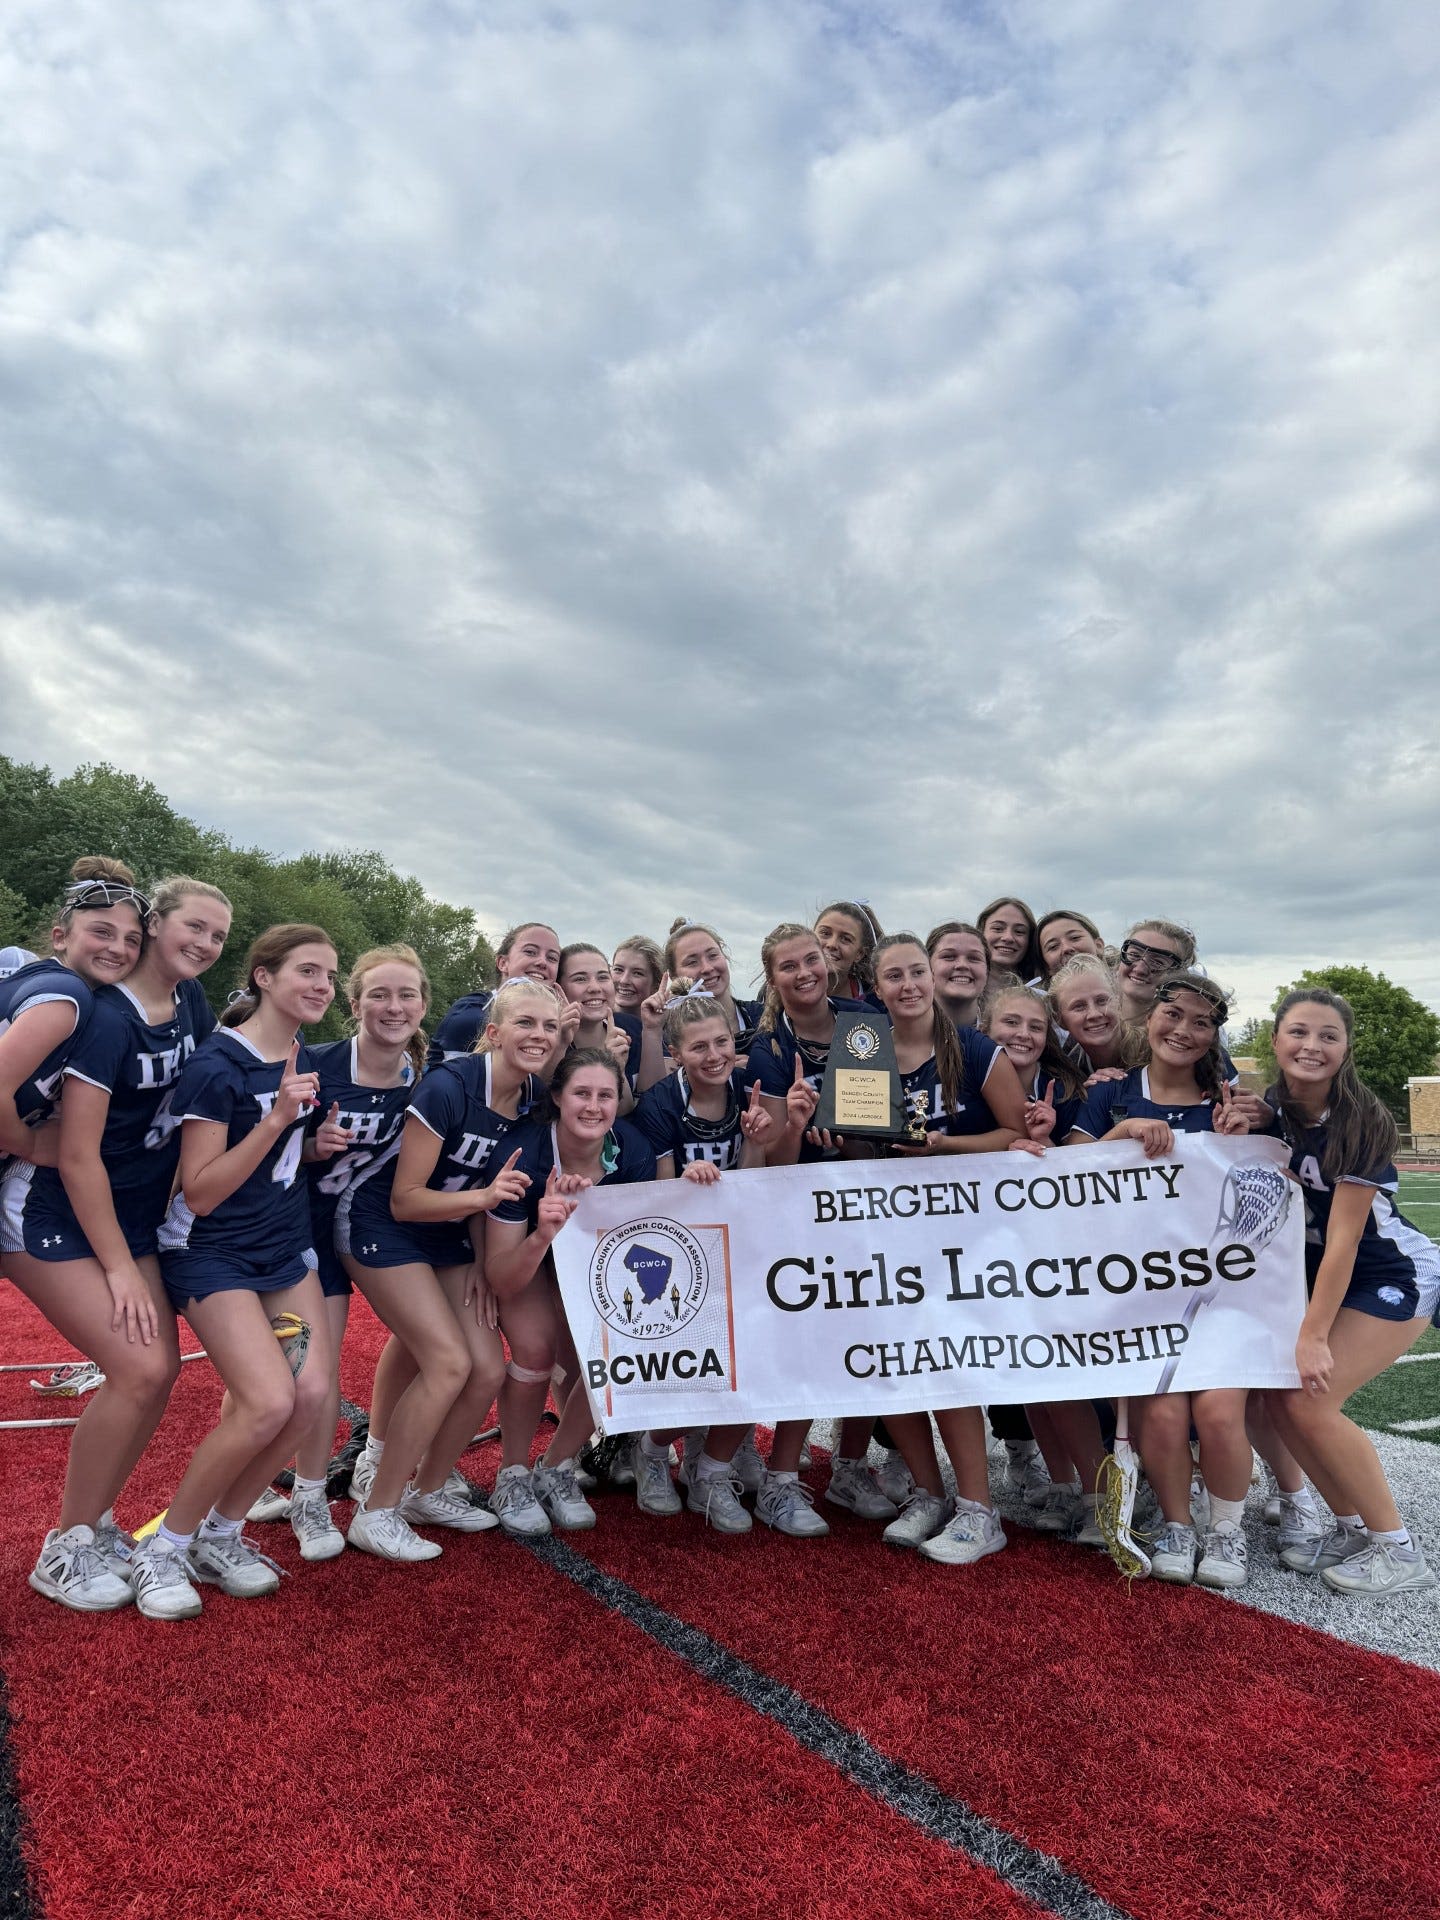 IHA girls lacrosse wins Bergen County championship, ending Ridgewood's 18-year reign